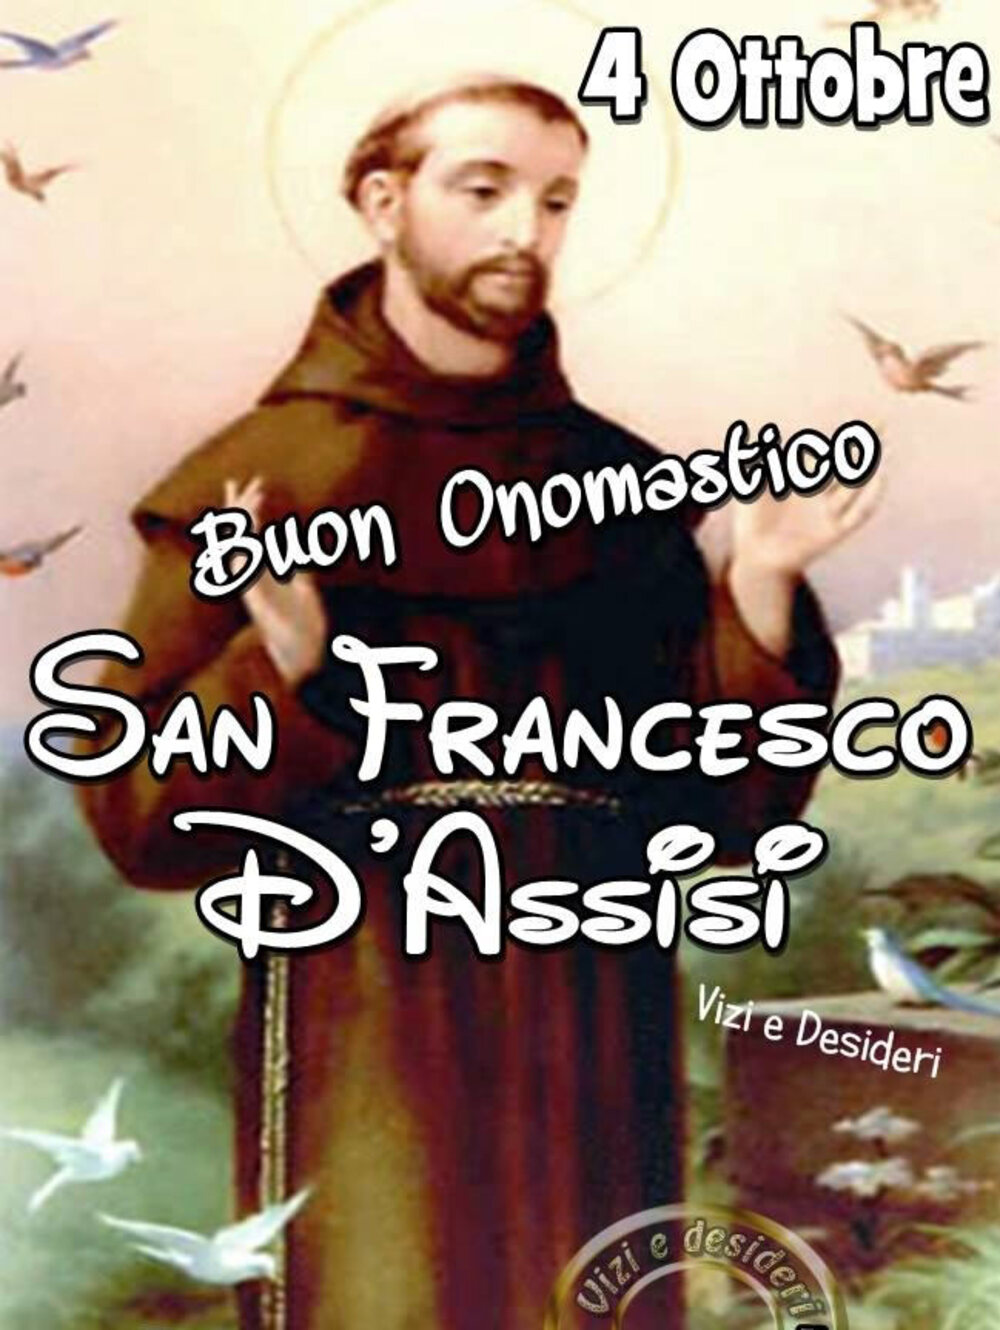 "4 Ottobre Buon Onomastico San Francesco d'Assisi"